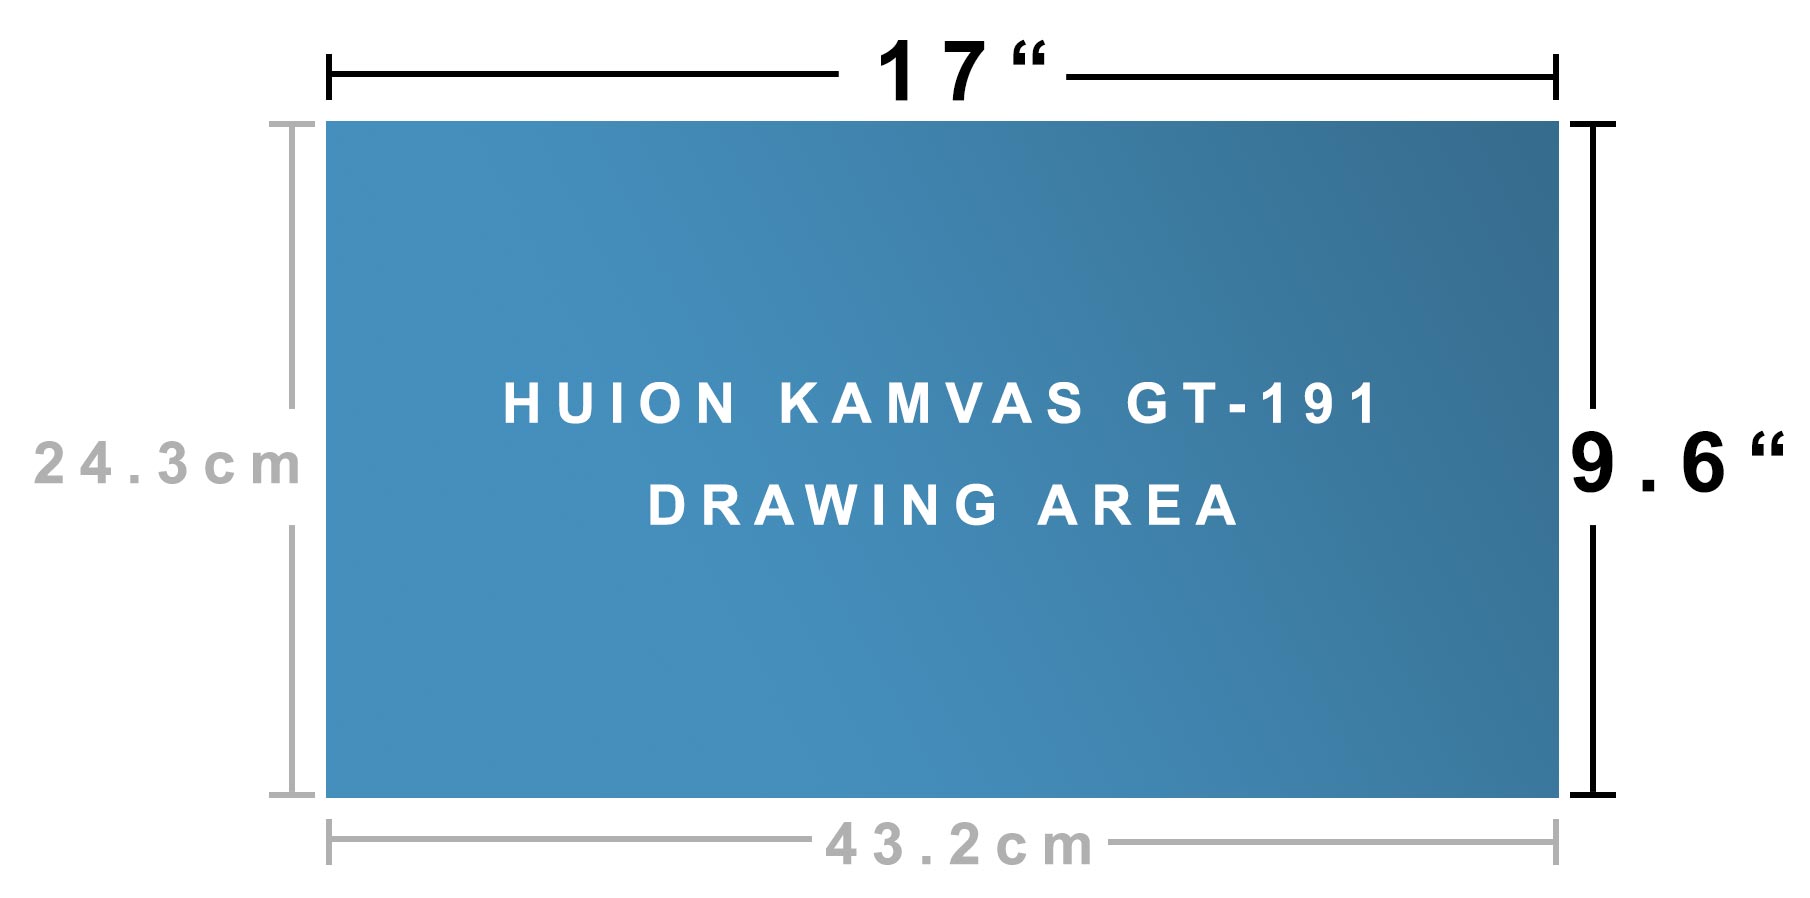 Huion KAMVAS GT-191 screen size measurement